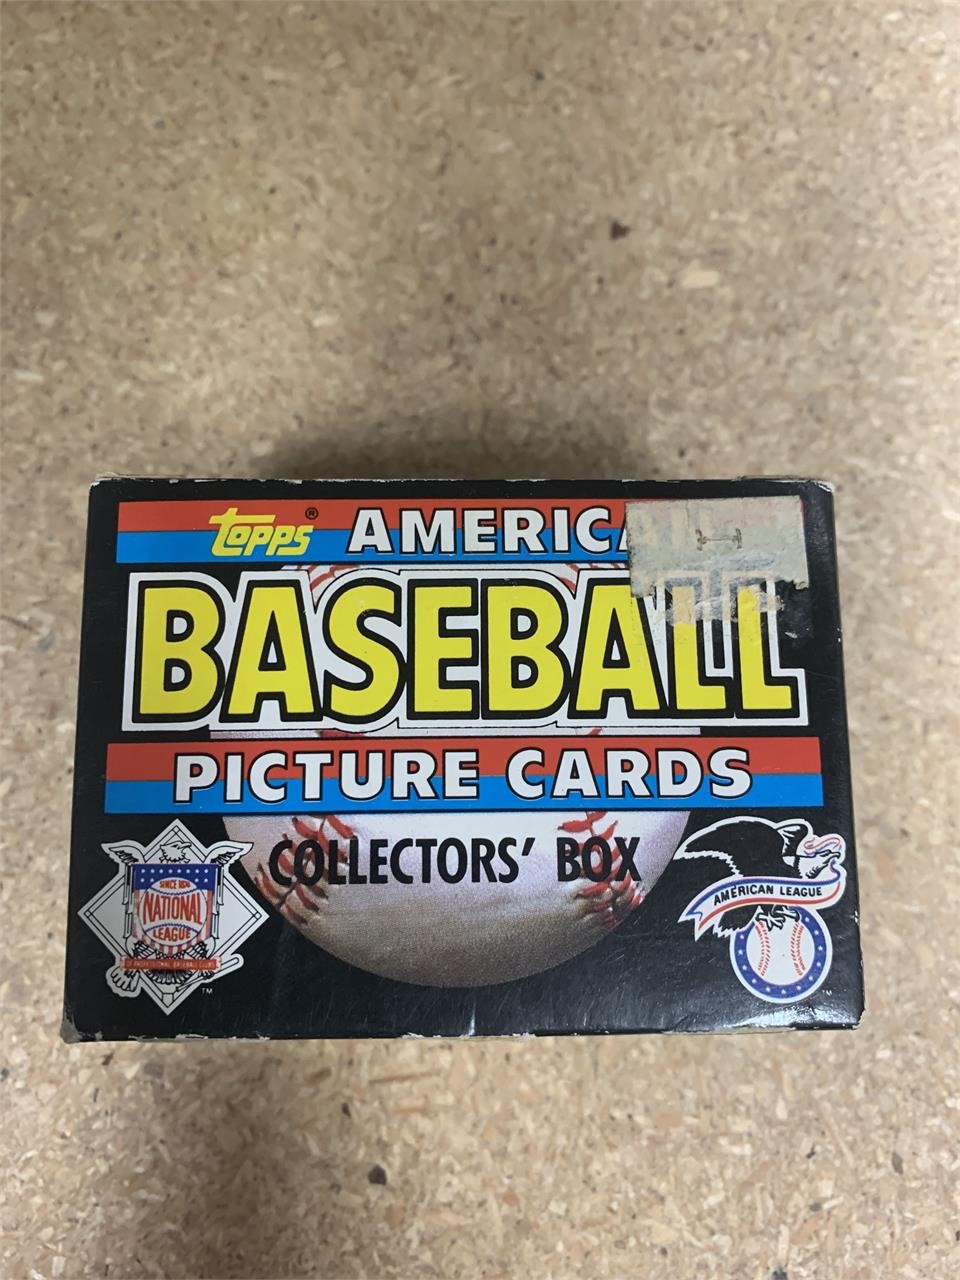 Topps 1988 baseball card collectors box